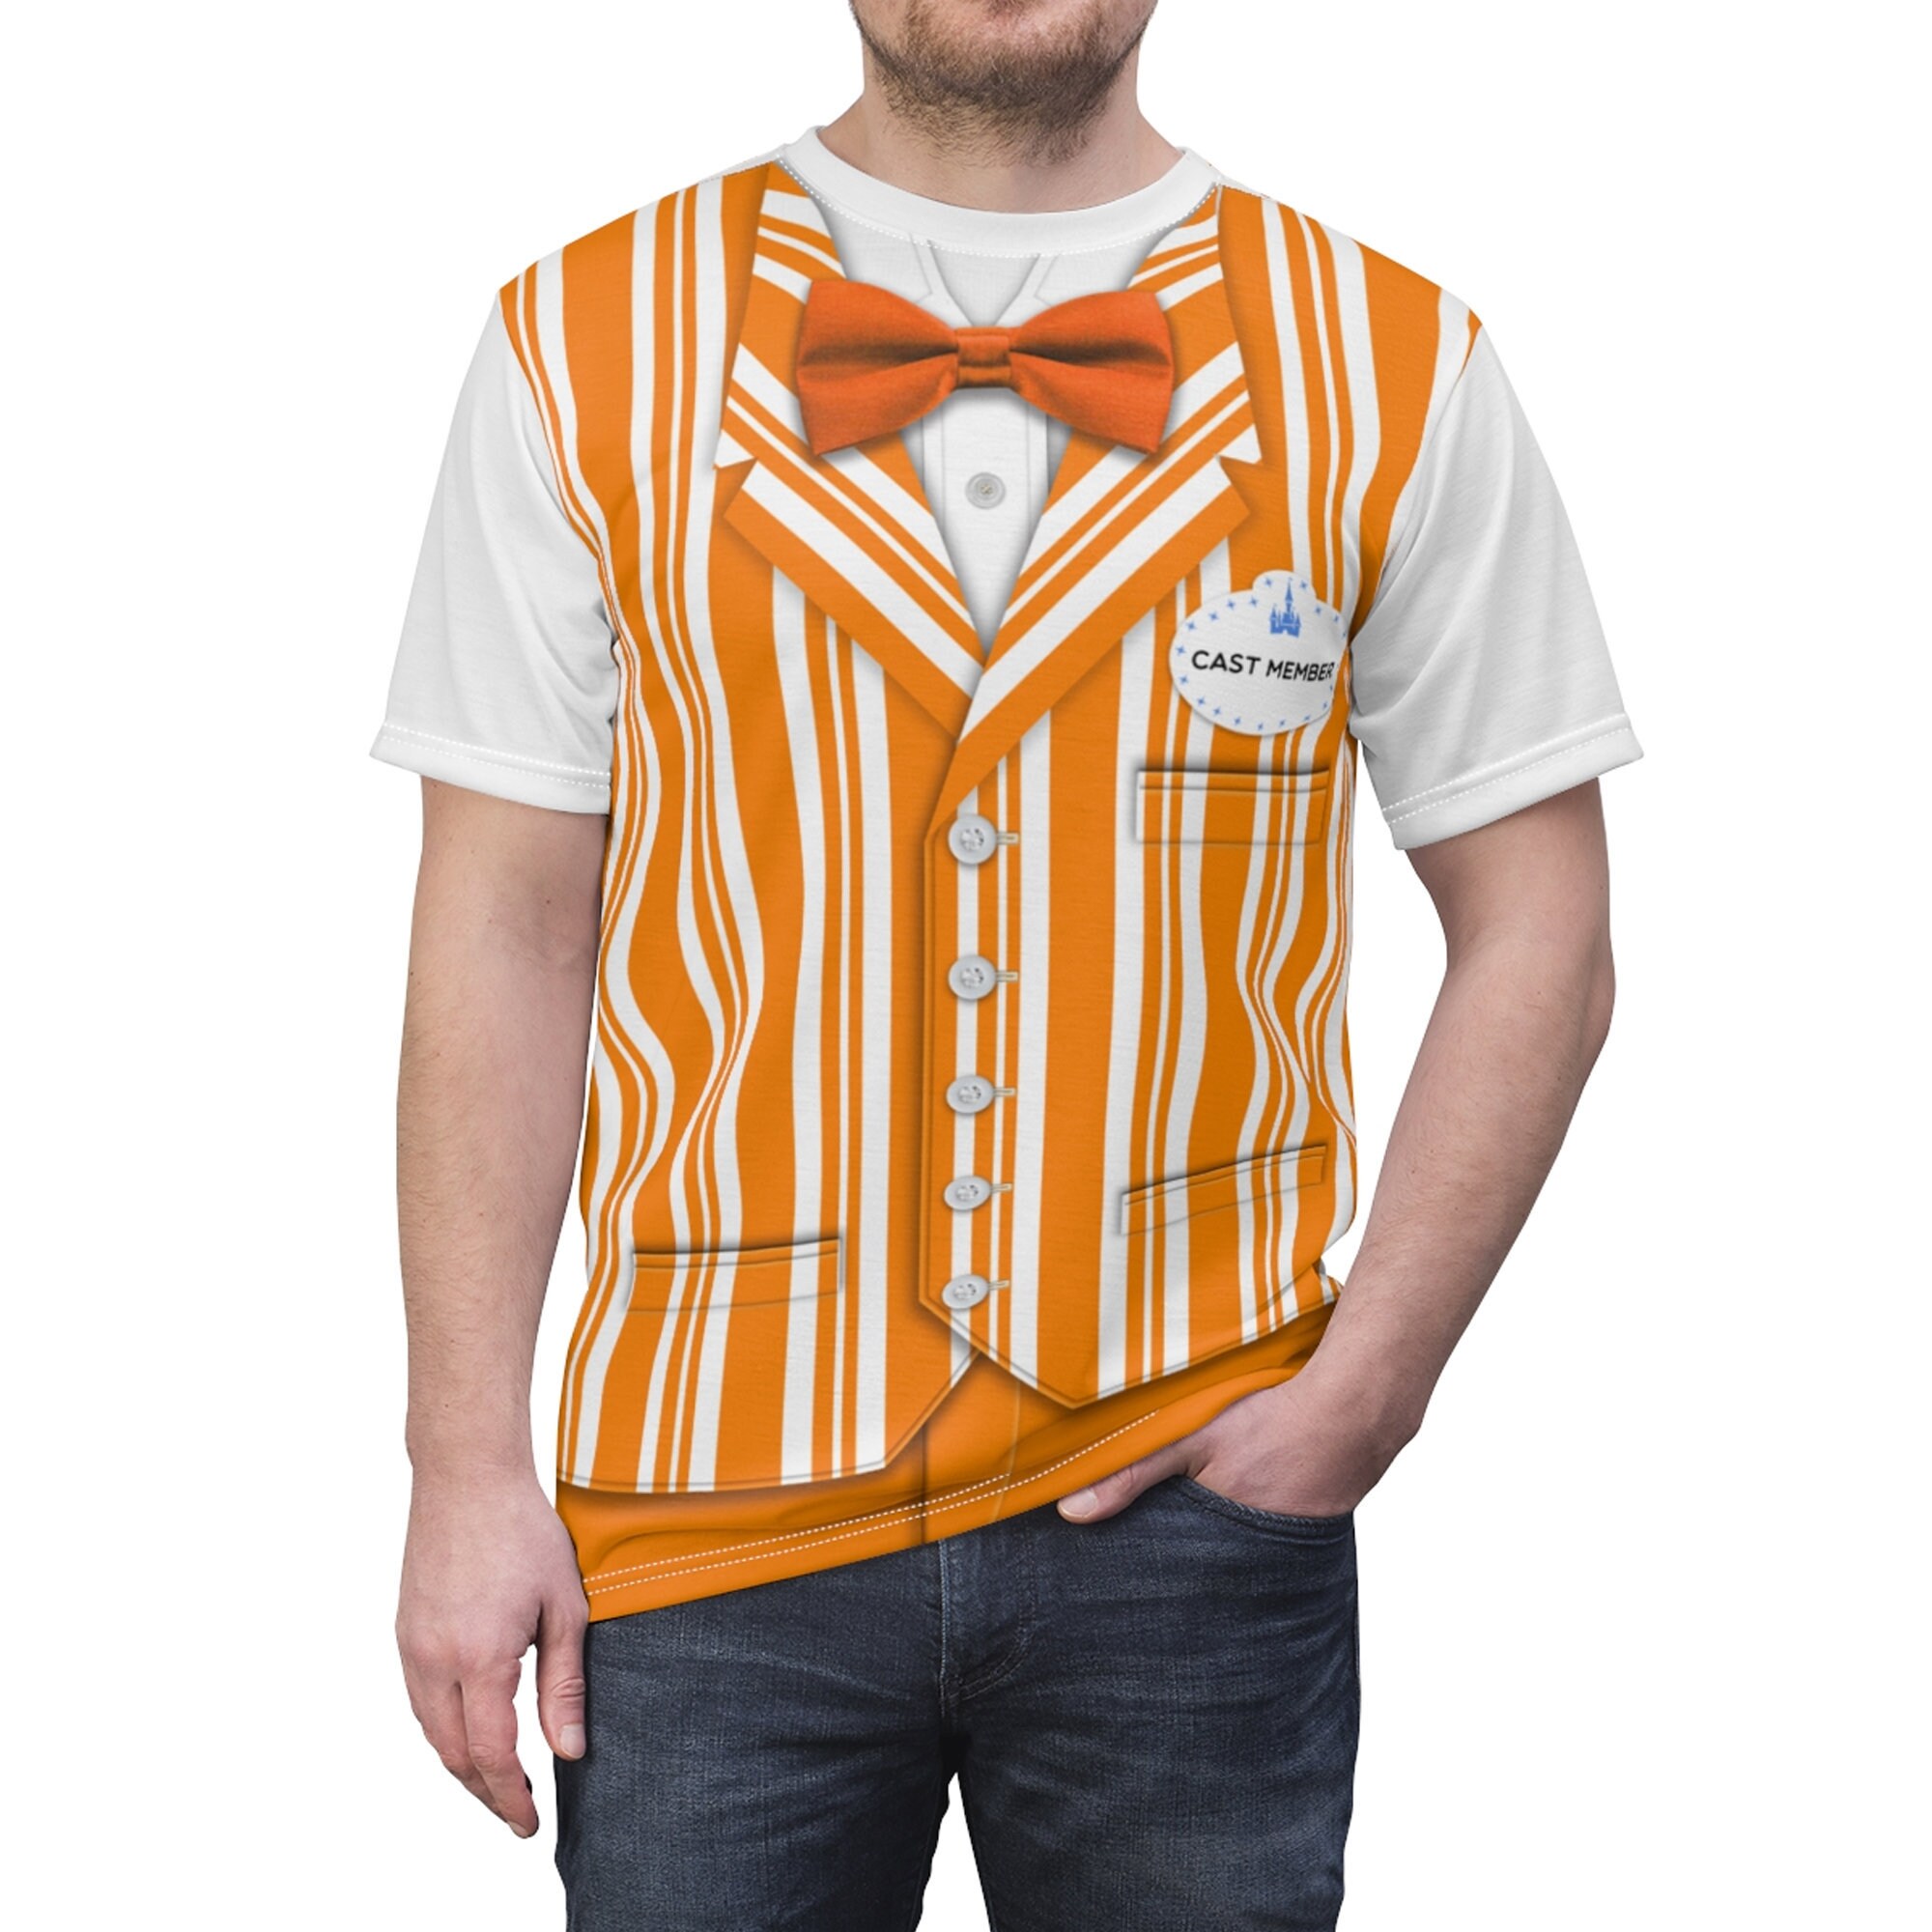 Orange Dapper Dan Shirt, The Dapper Dans Costume, Walt Disney World Shirt